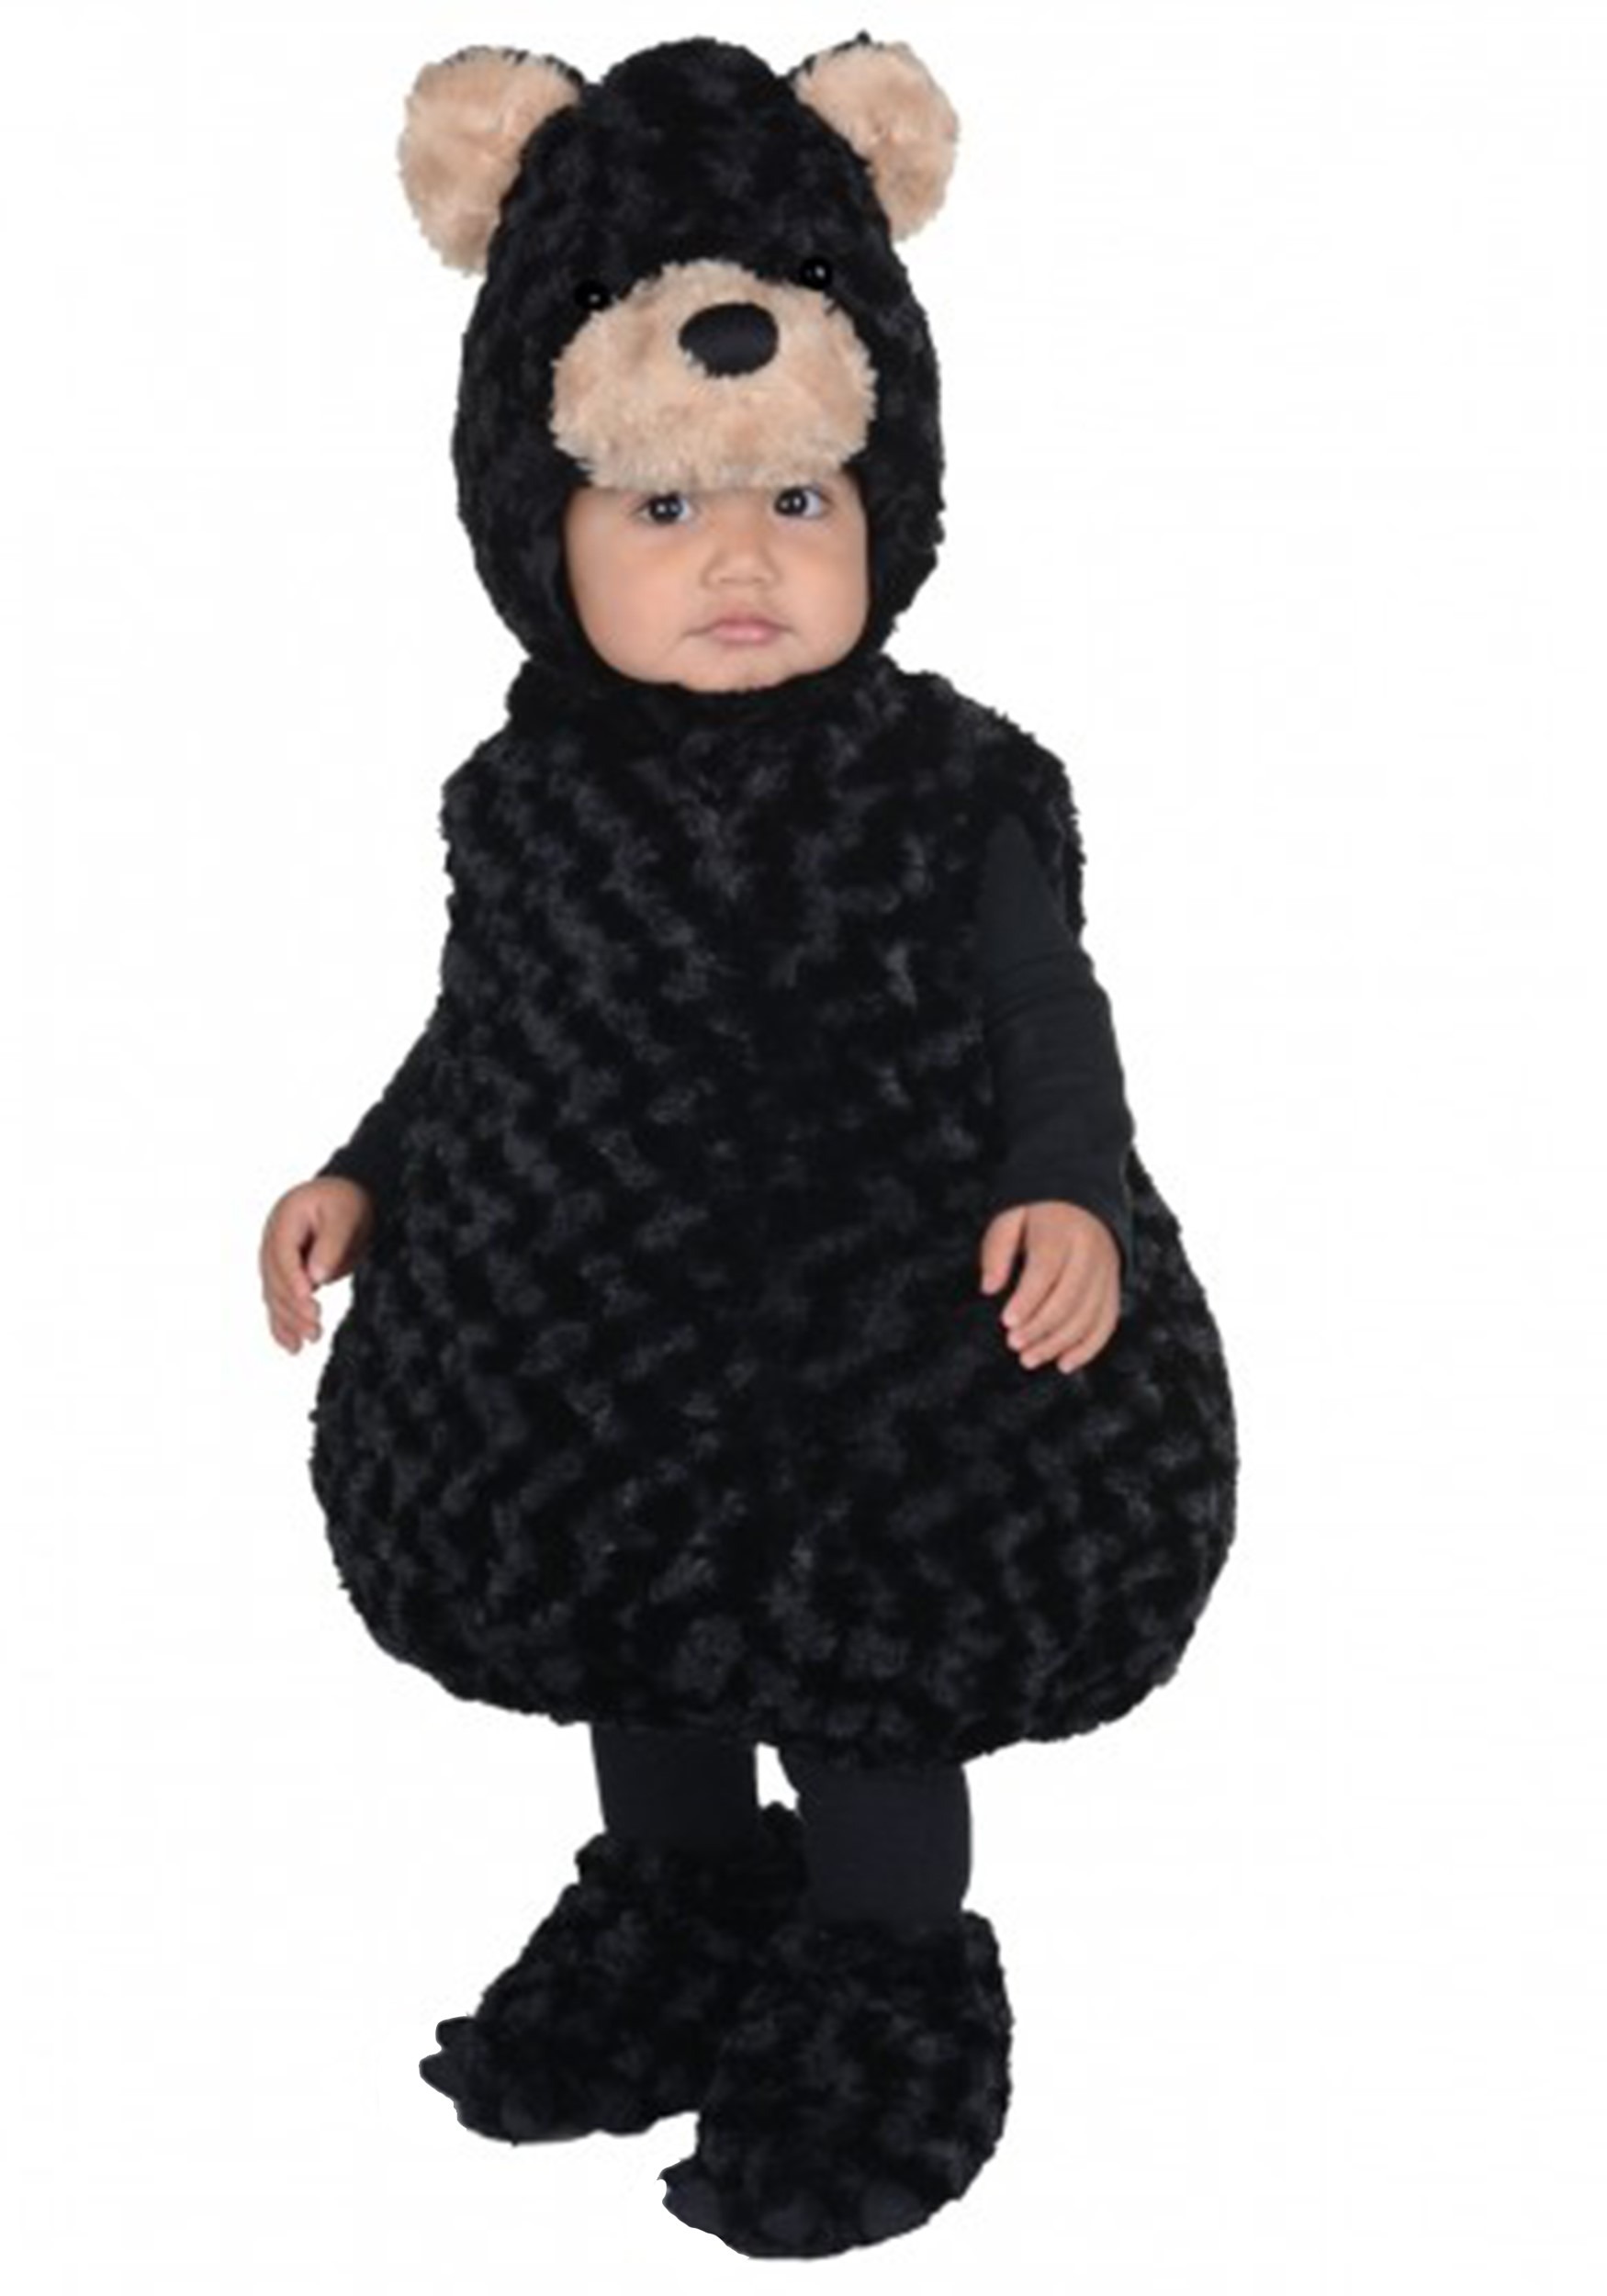 The Toddler Black Bear Bubble Costume